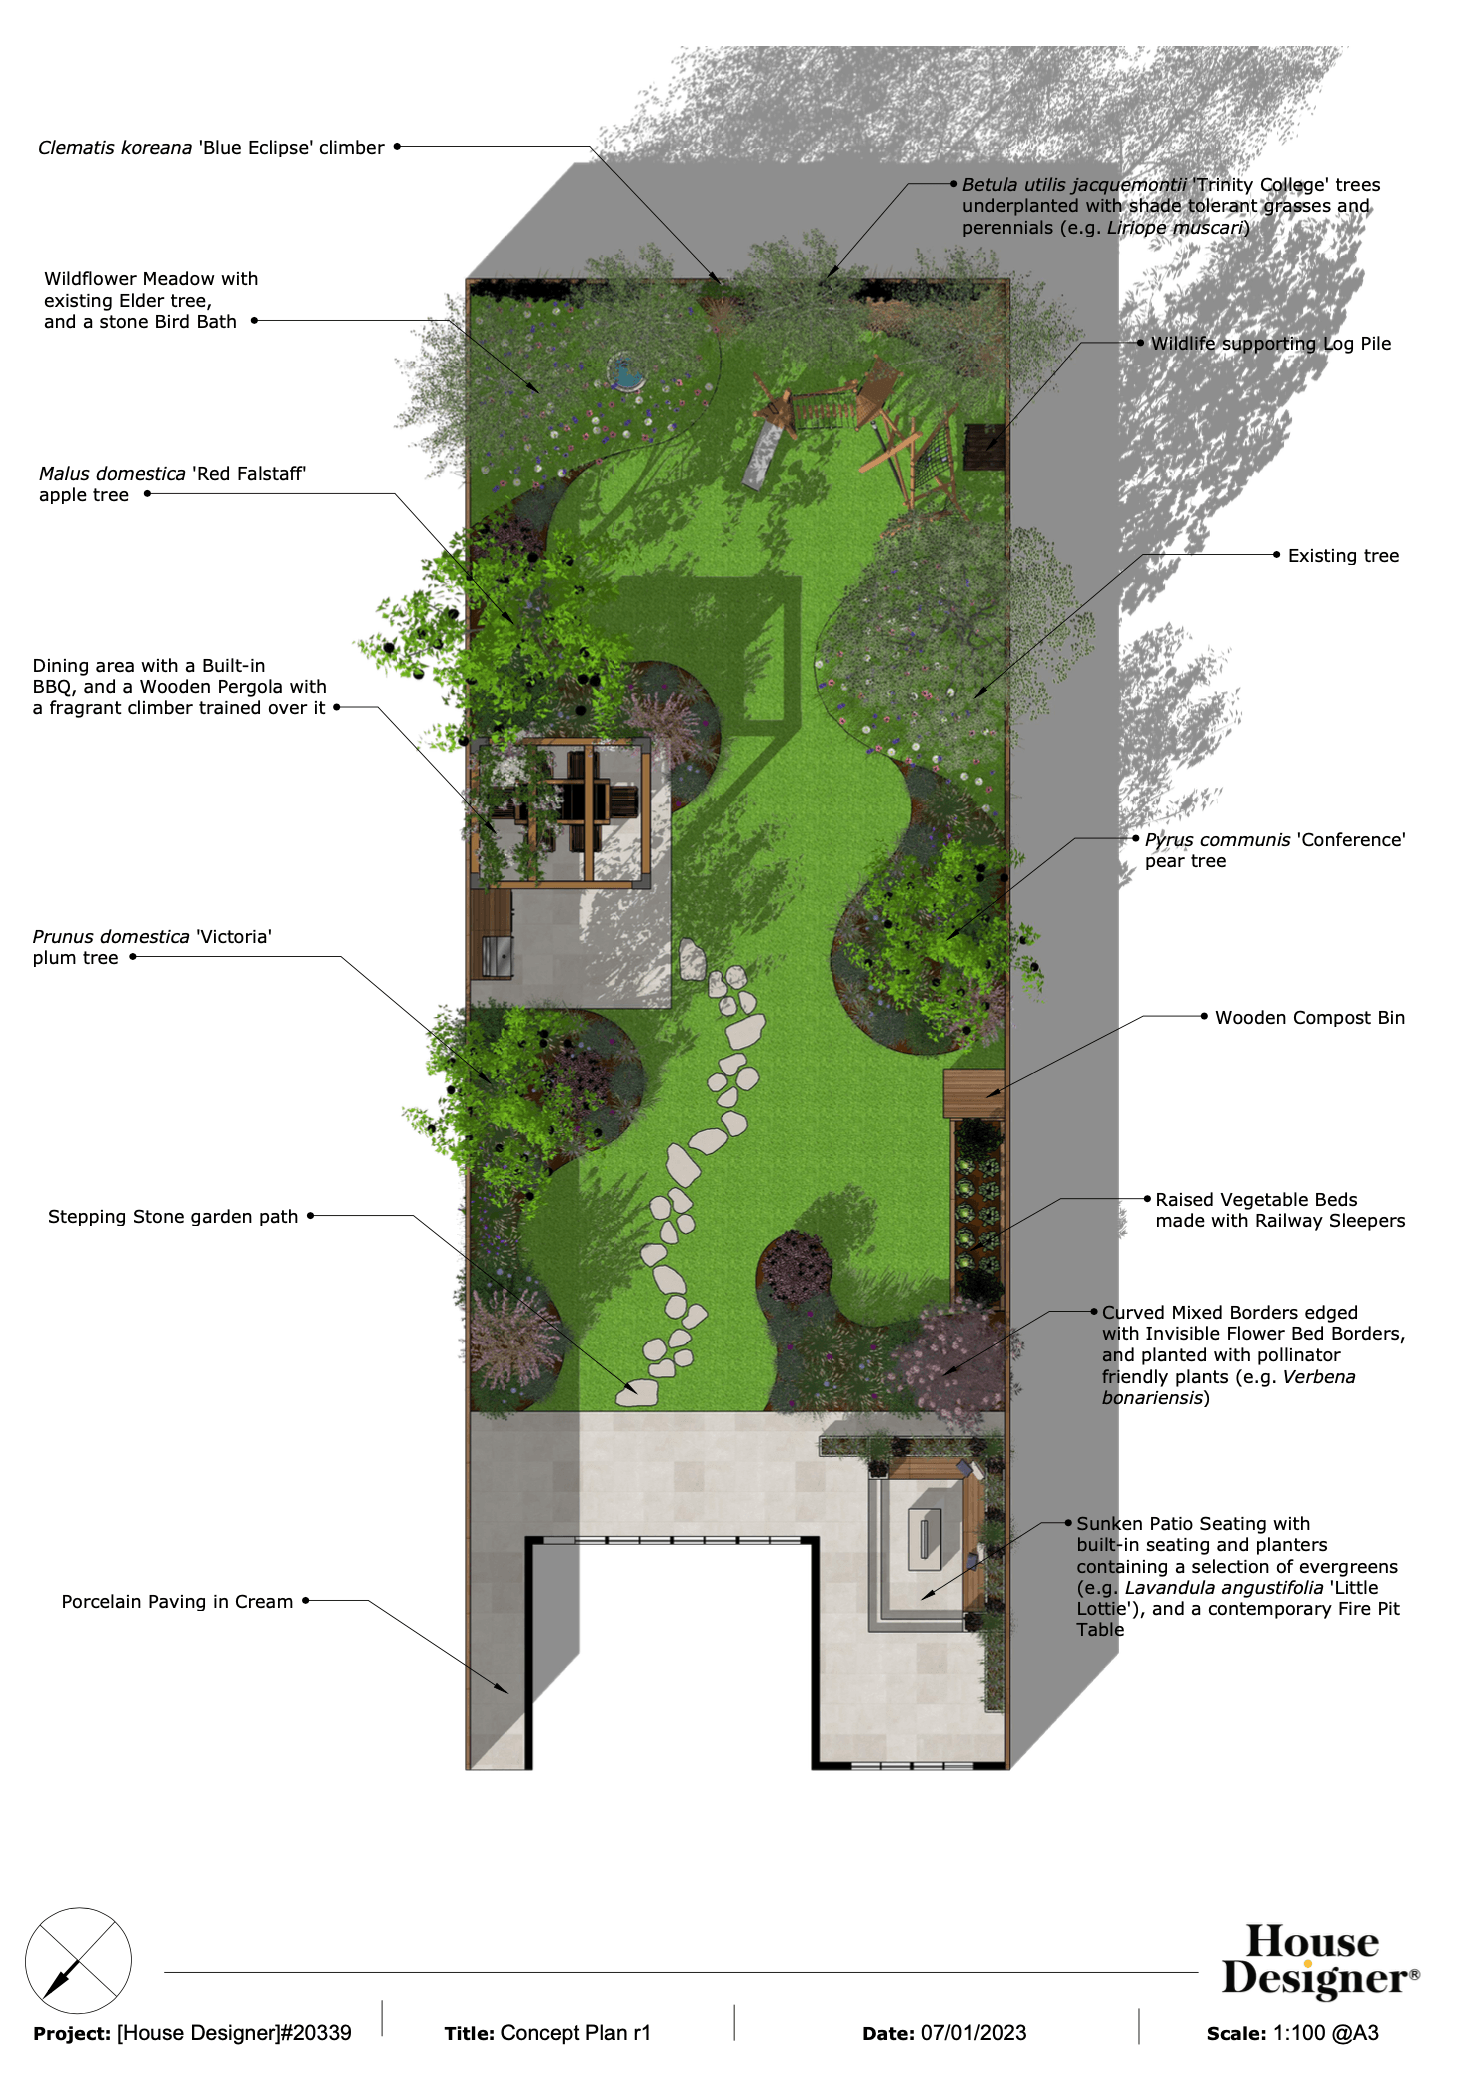 Garden-design